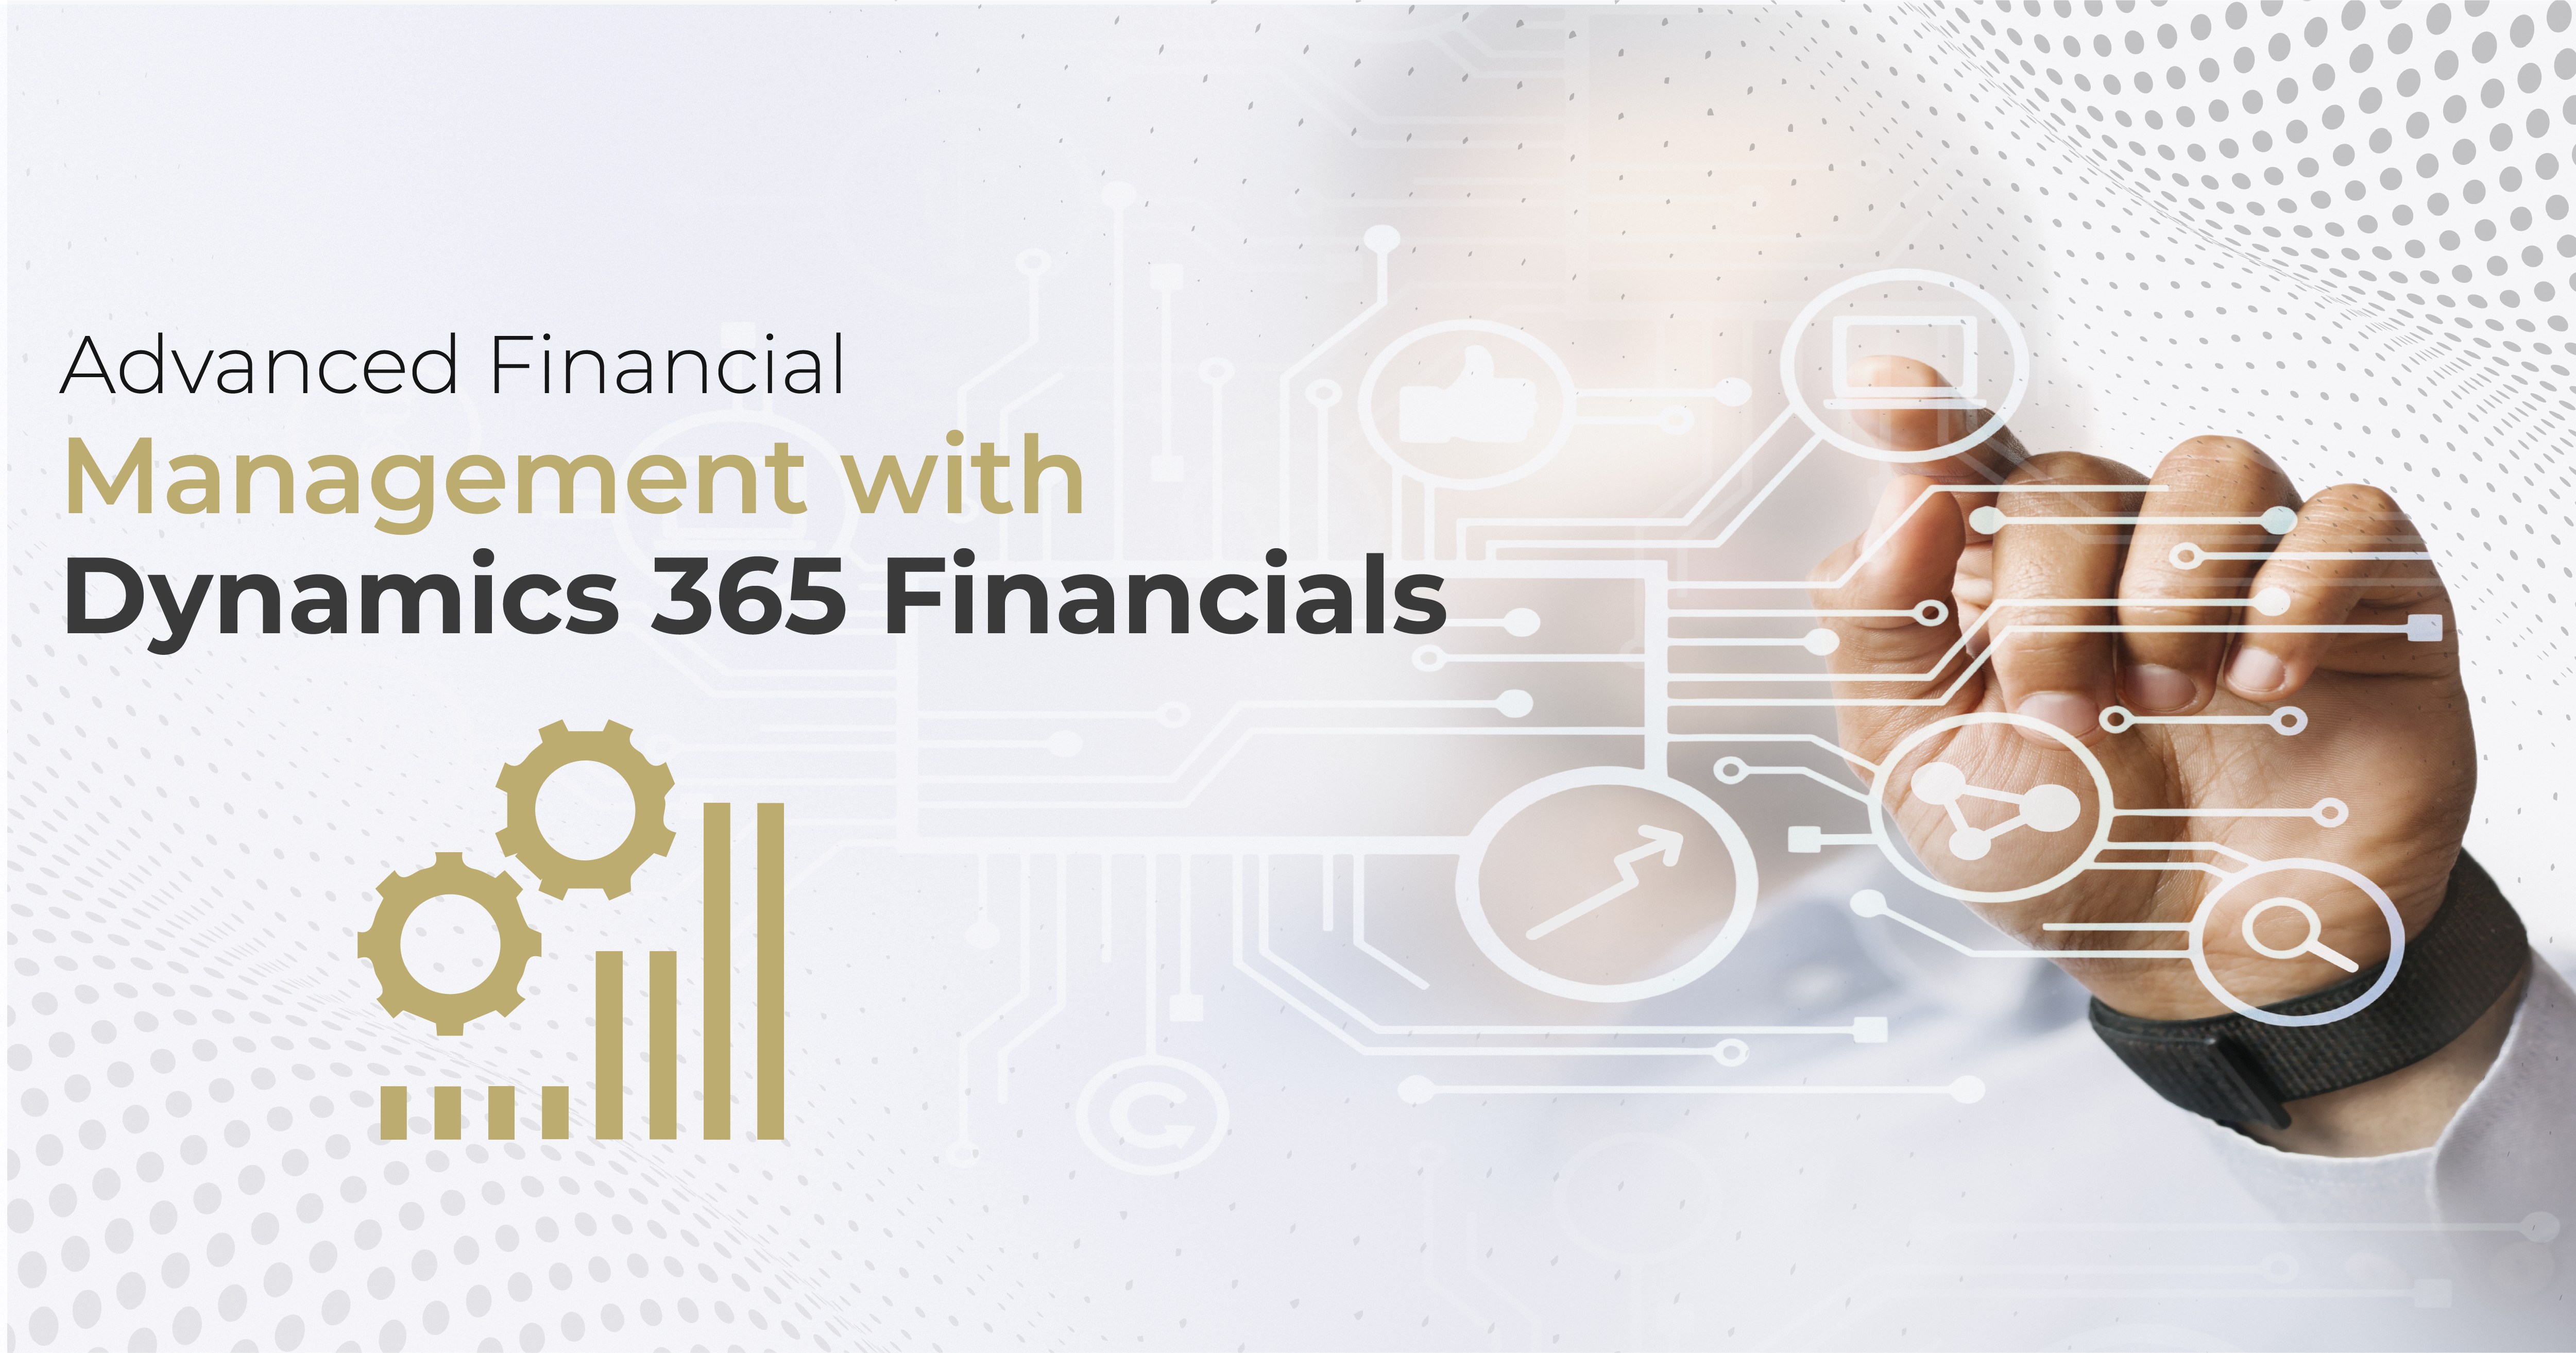 Advanced Financial Management with Dynamics 365 Financials